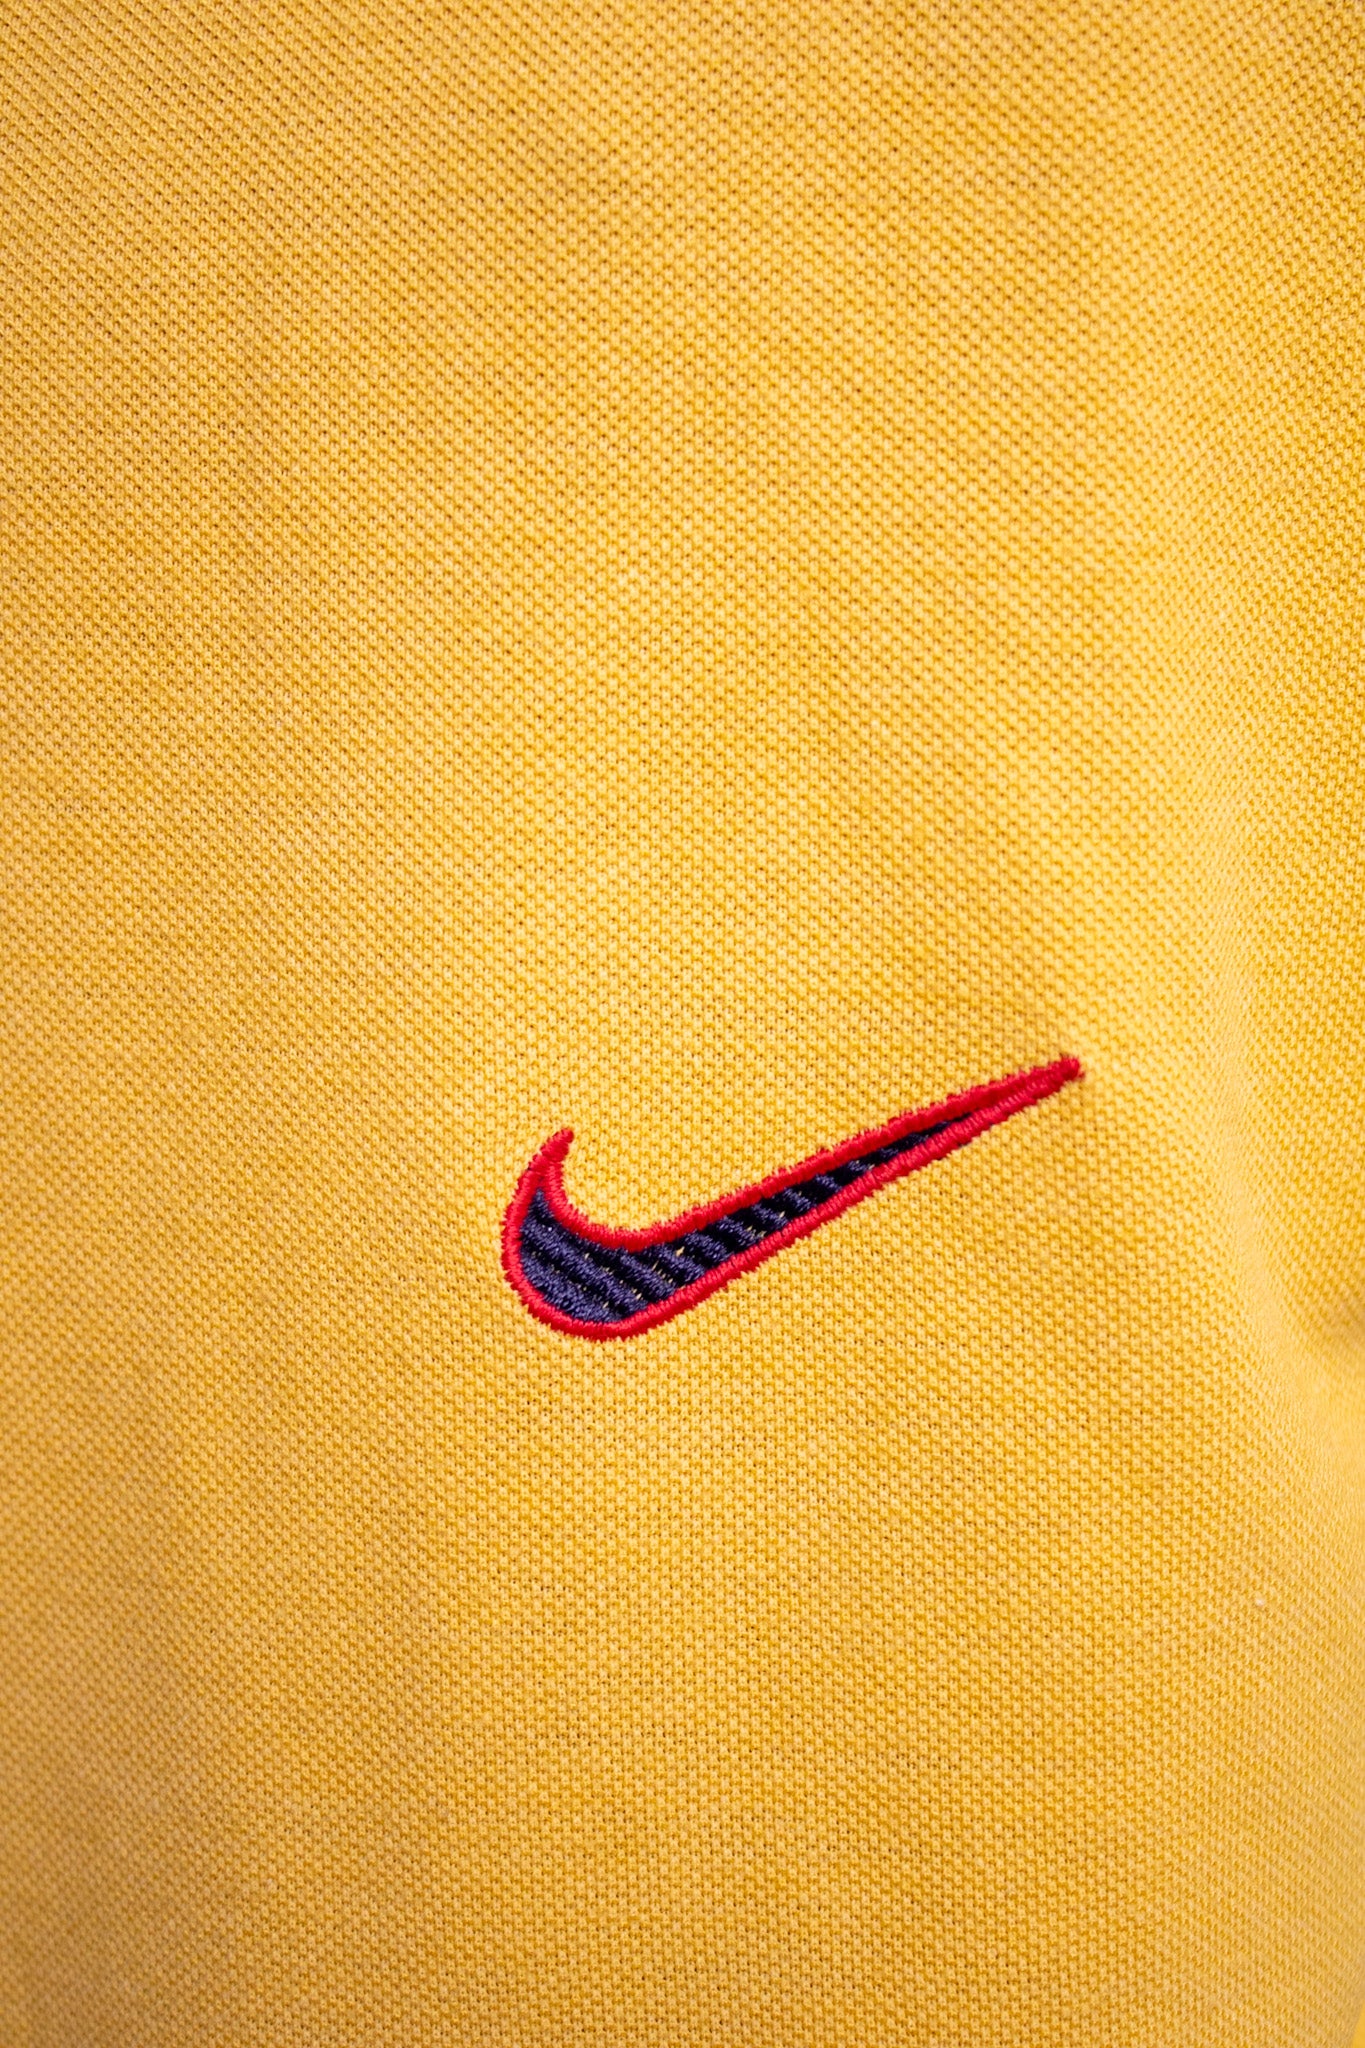 Nike Polo T-shirt